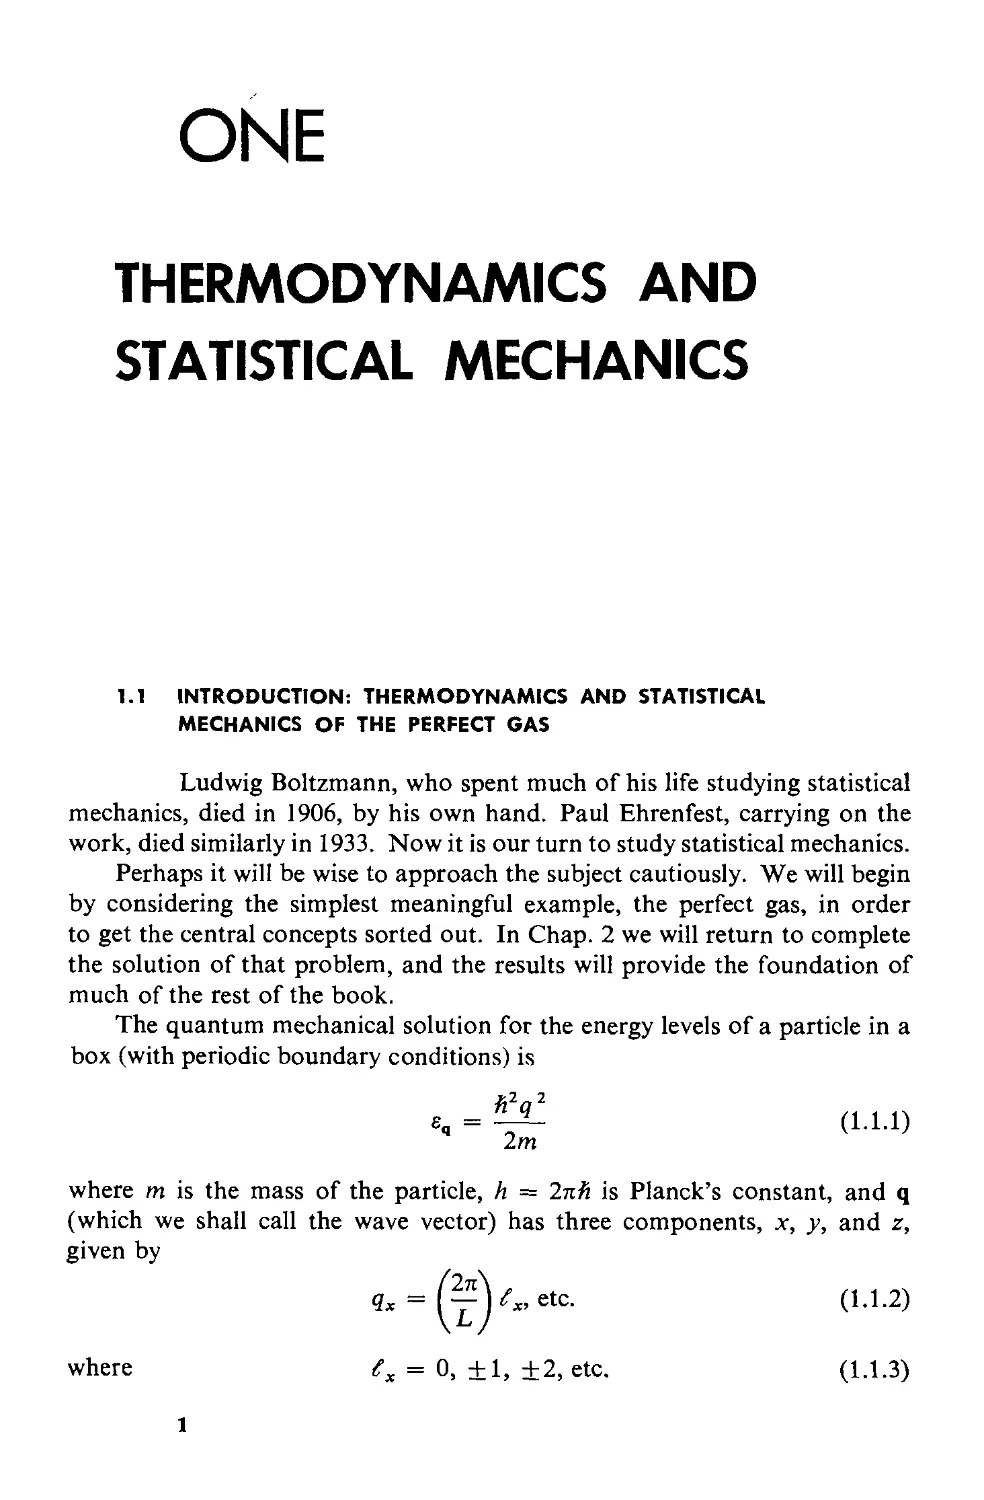 1. Thermodynamics and Statistical Mechanics